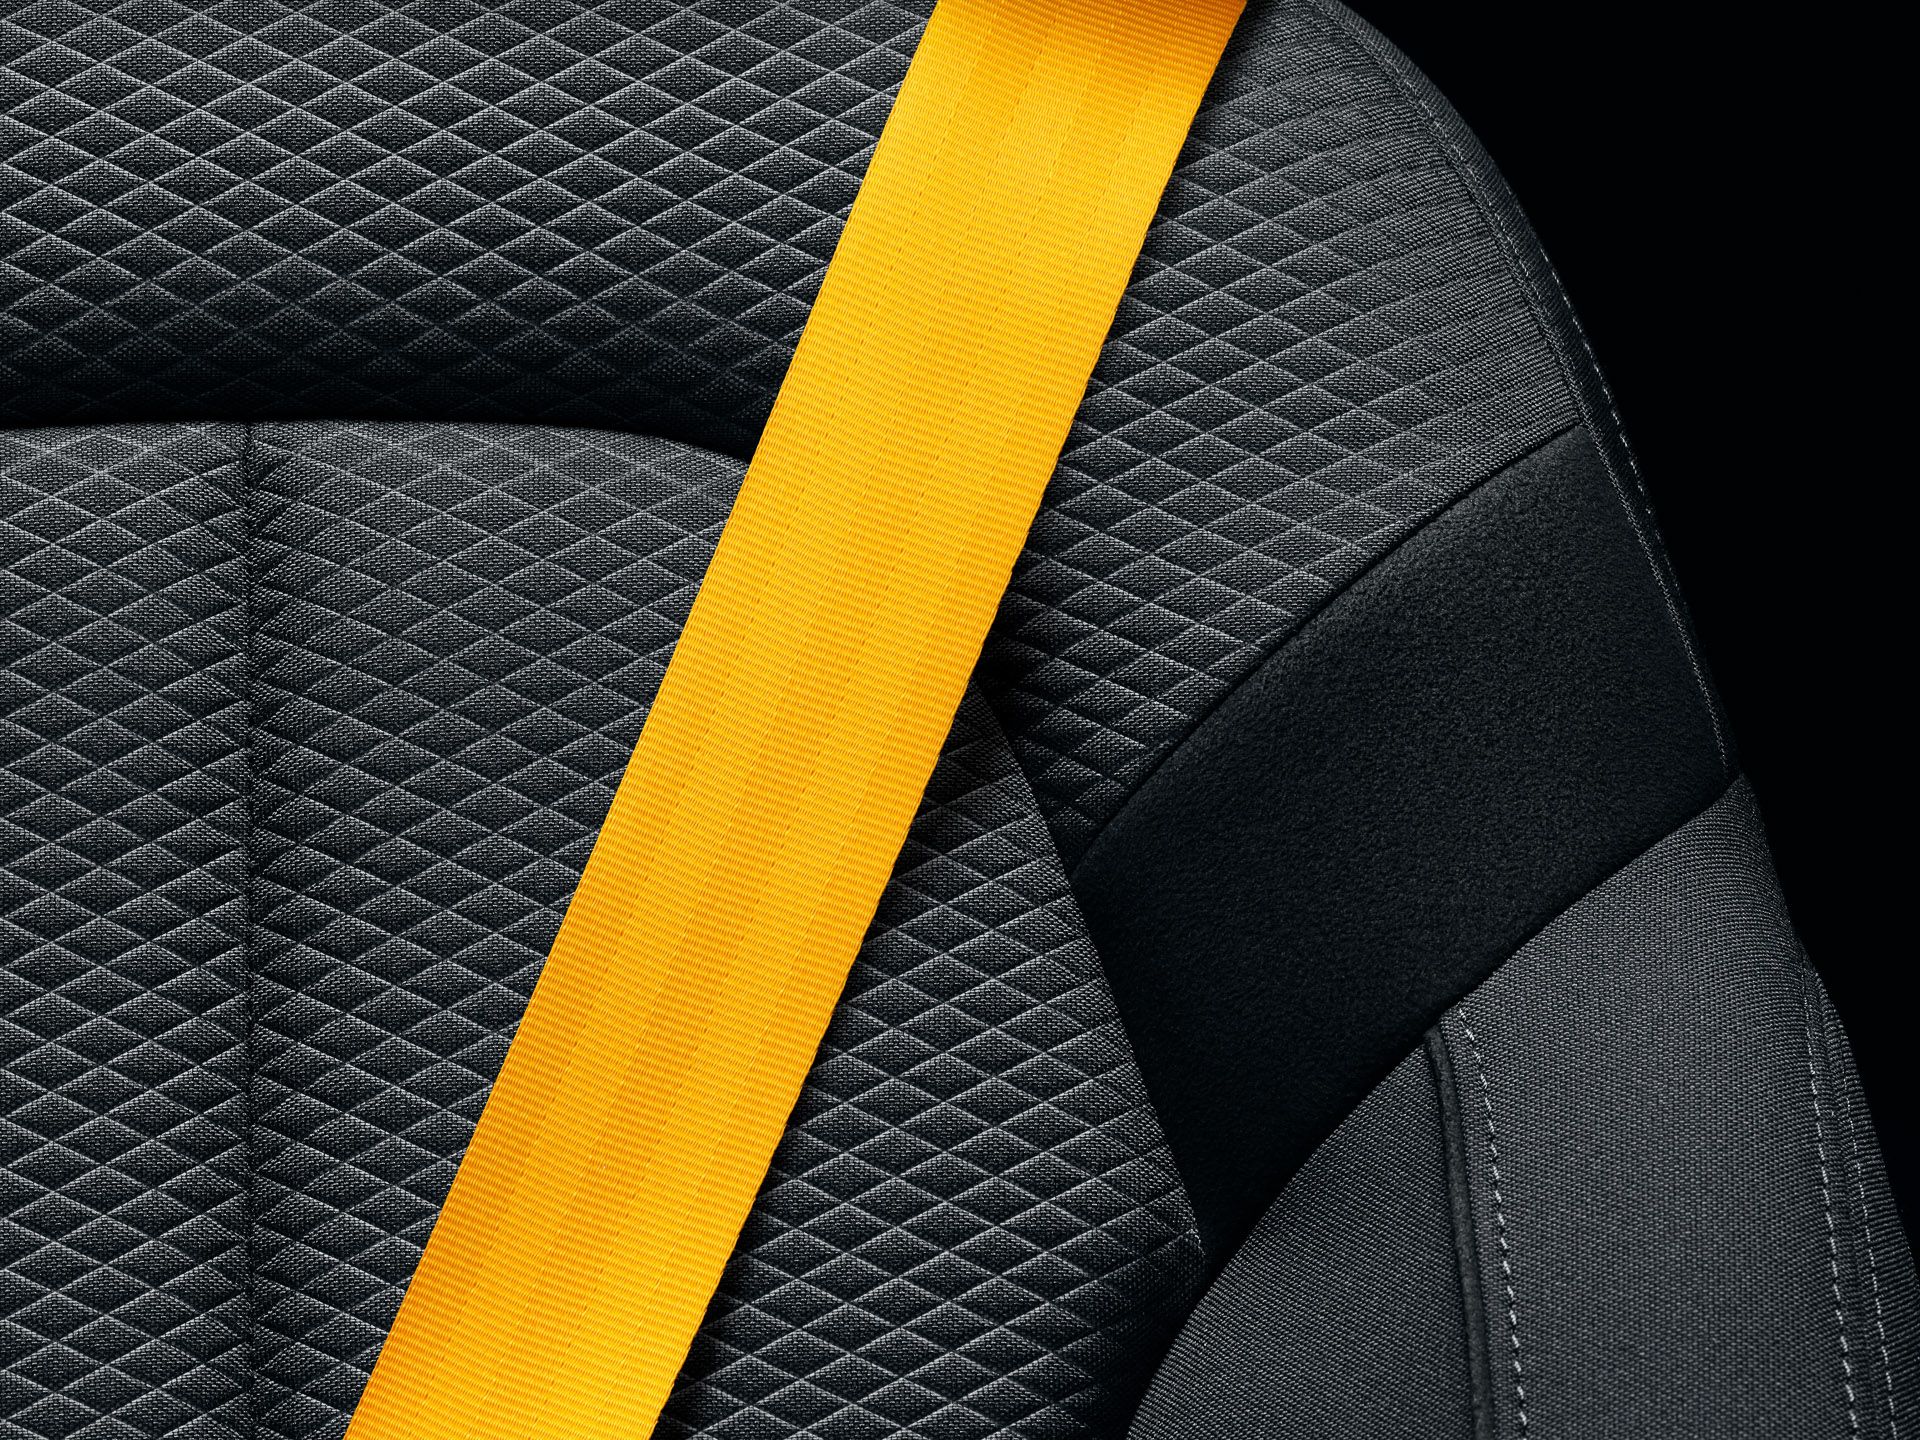 Polestar gold seatbelt and Polestar 3 interior